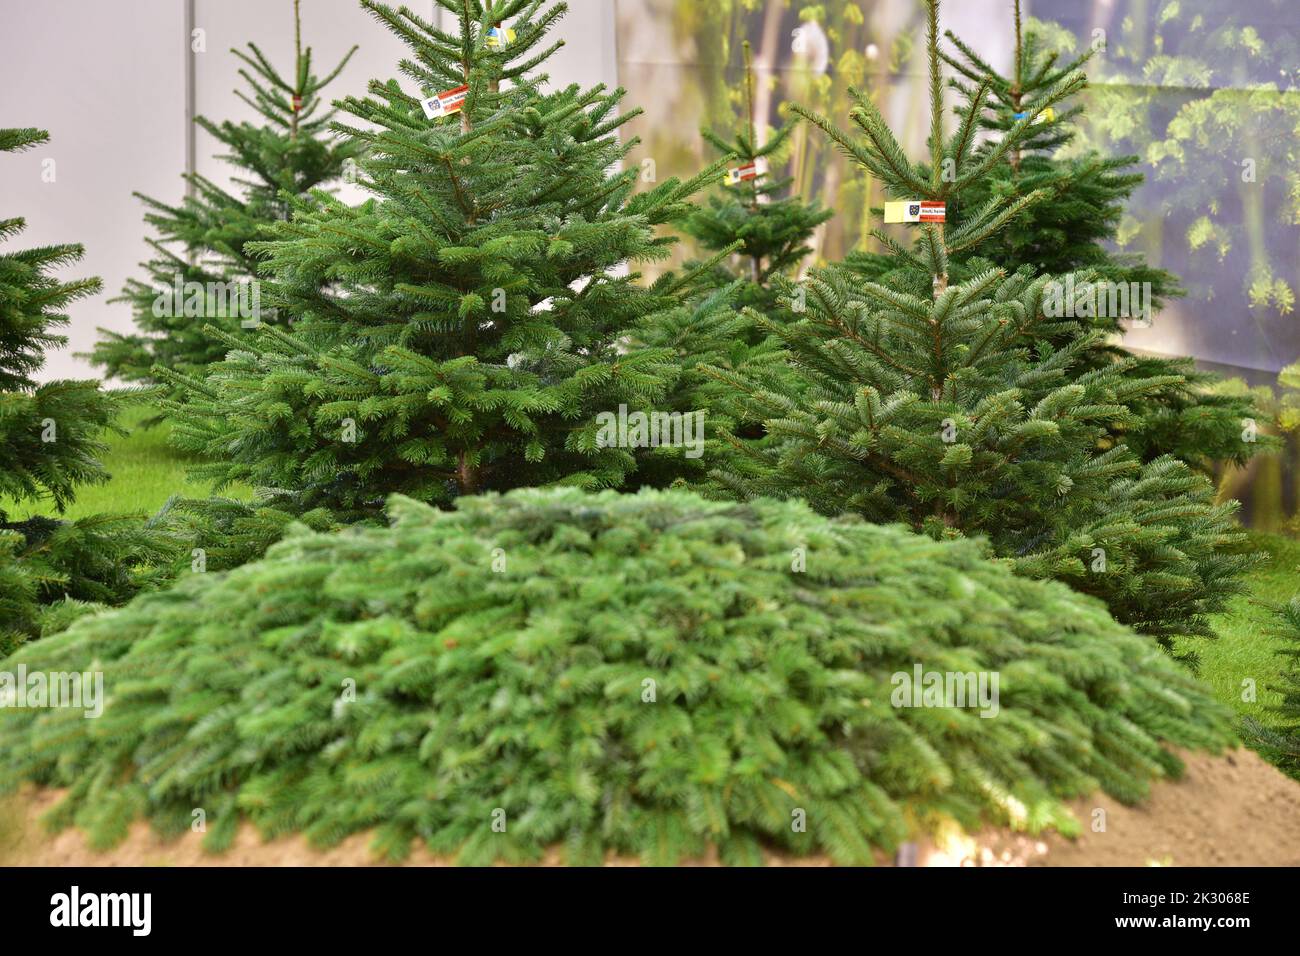 Grenn Christmas trees at a fair in Lower Austria Stock Photo